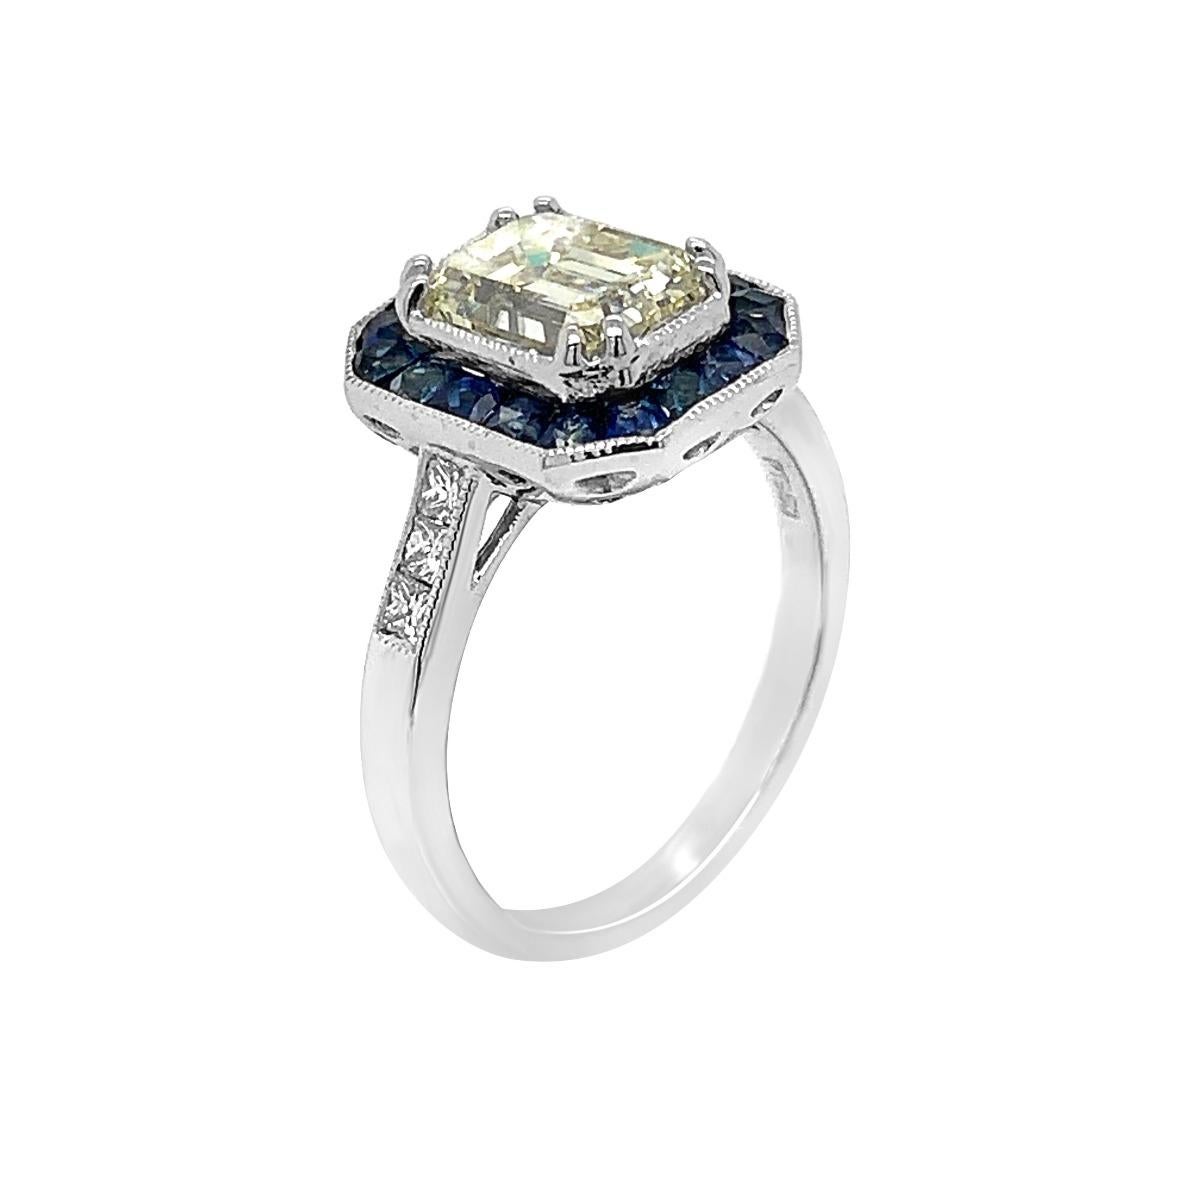 R3754- LSE0002

Metal: Platinum

0.20 CT Side Round Diamonds

1.20 CT Combined Sapphire With Center 2.02 CT Emerald Cut Diamond

Diamond Color: K

Clarity VVS